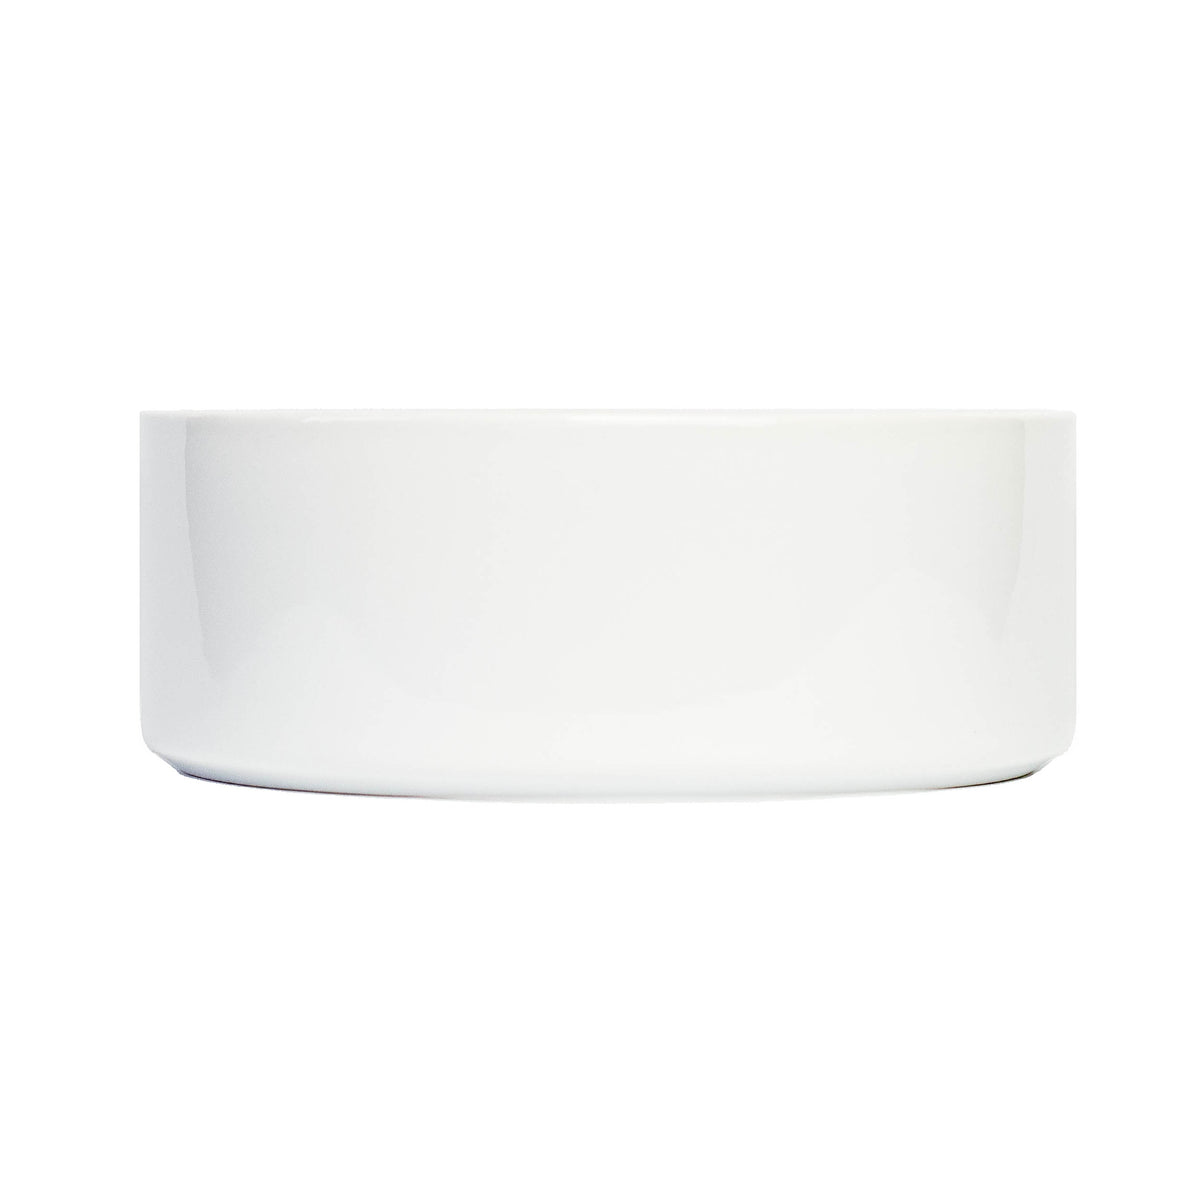 Personalised bowl for cats / ceramic - 22oz 650ml (design 4)